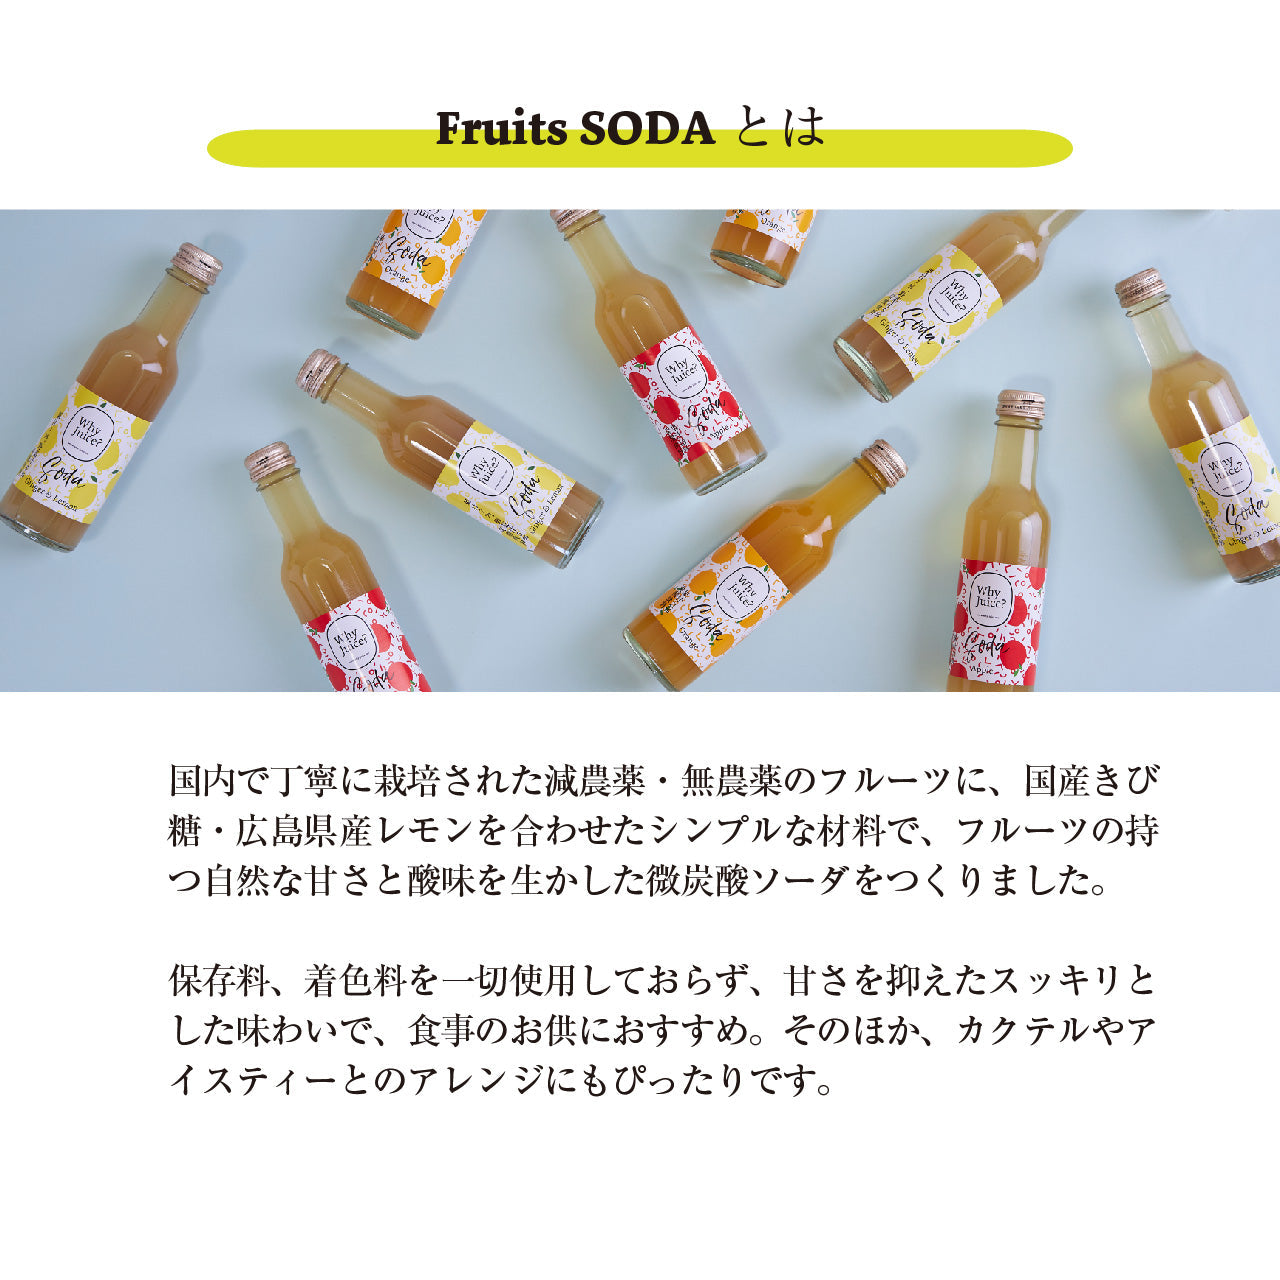 Fruits SODA ギフトボックス ミックス（6本セット）【減農薬・無農薬の果物と野菜】